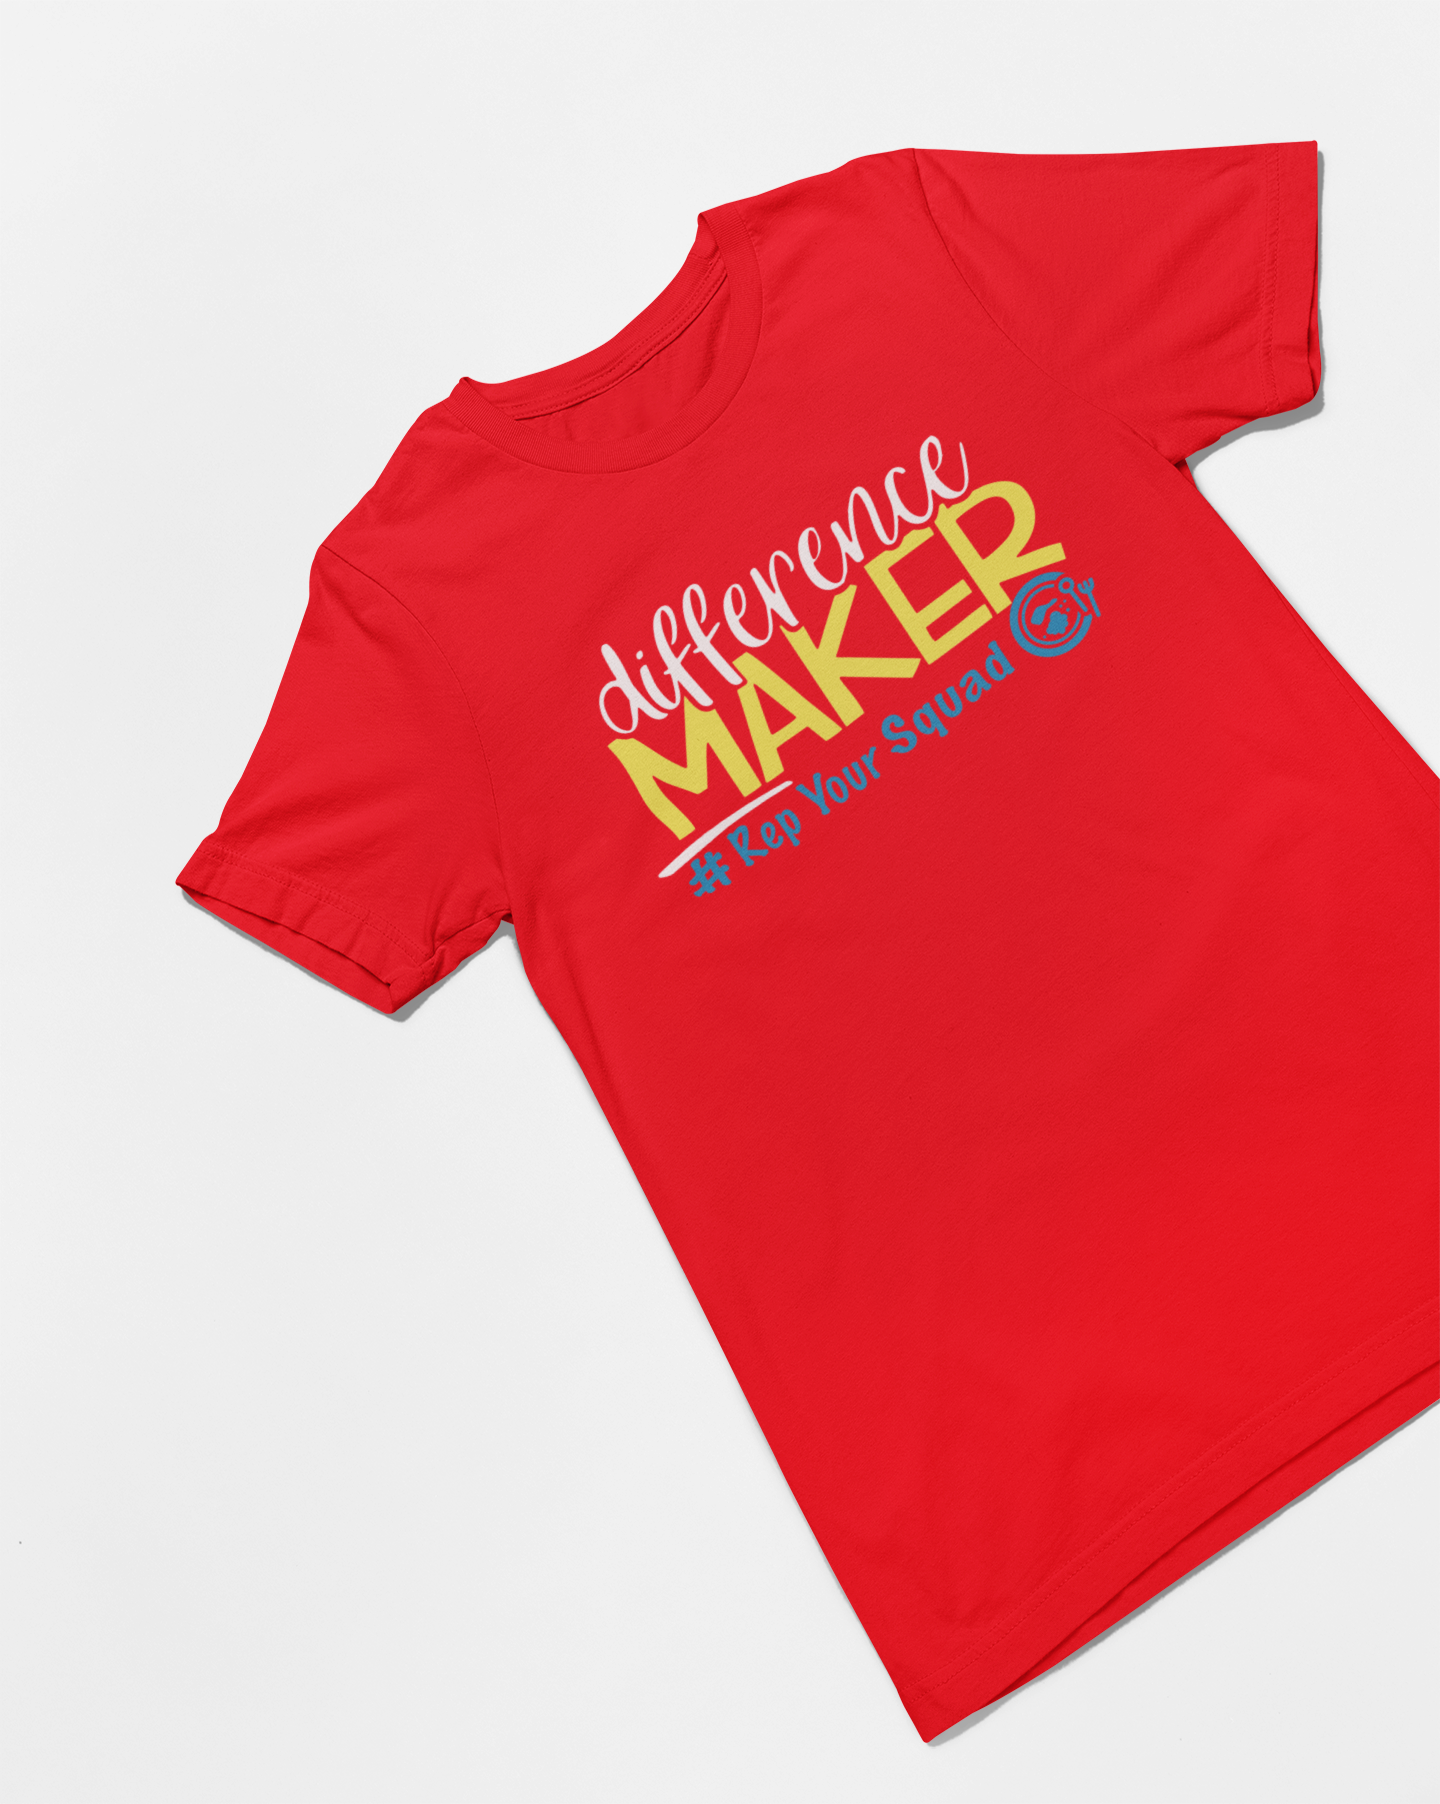 Difference Maker Customizable T-shirt